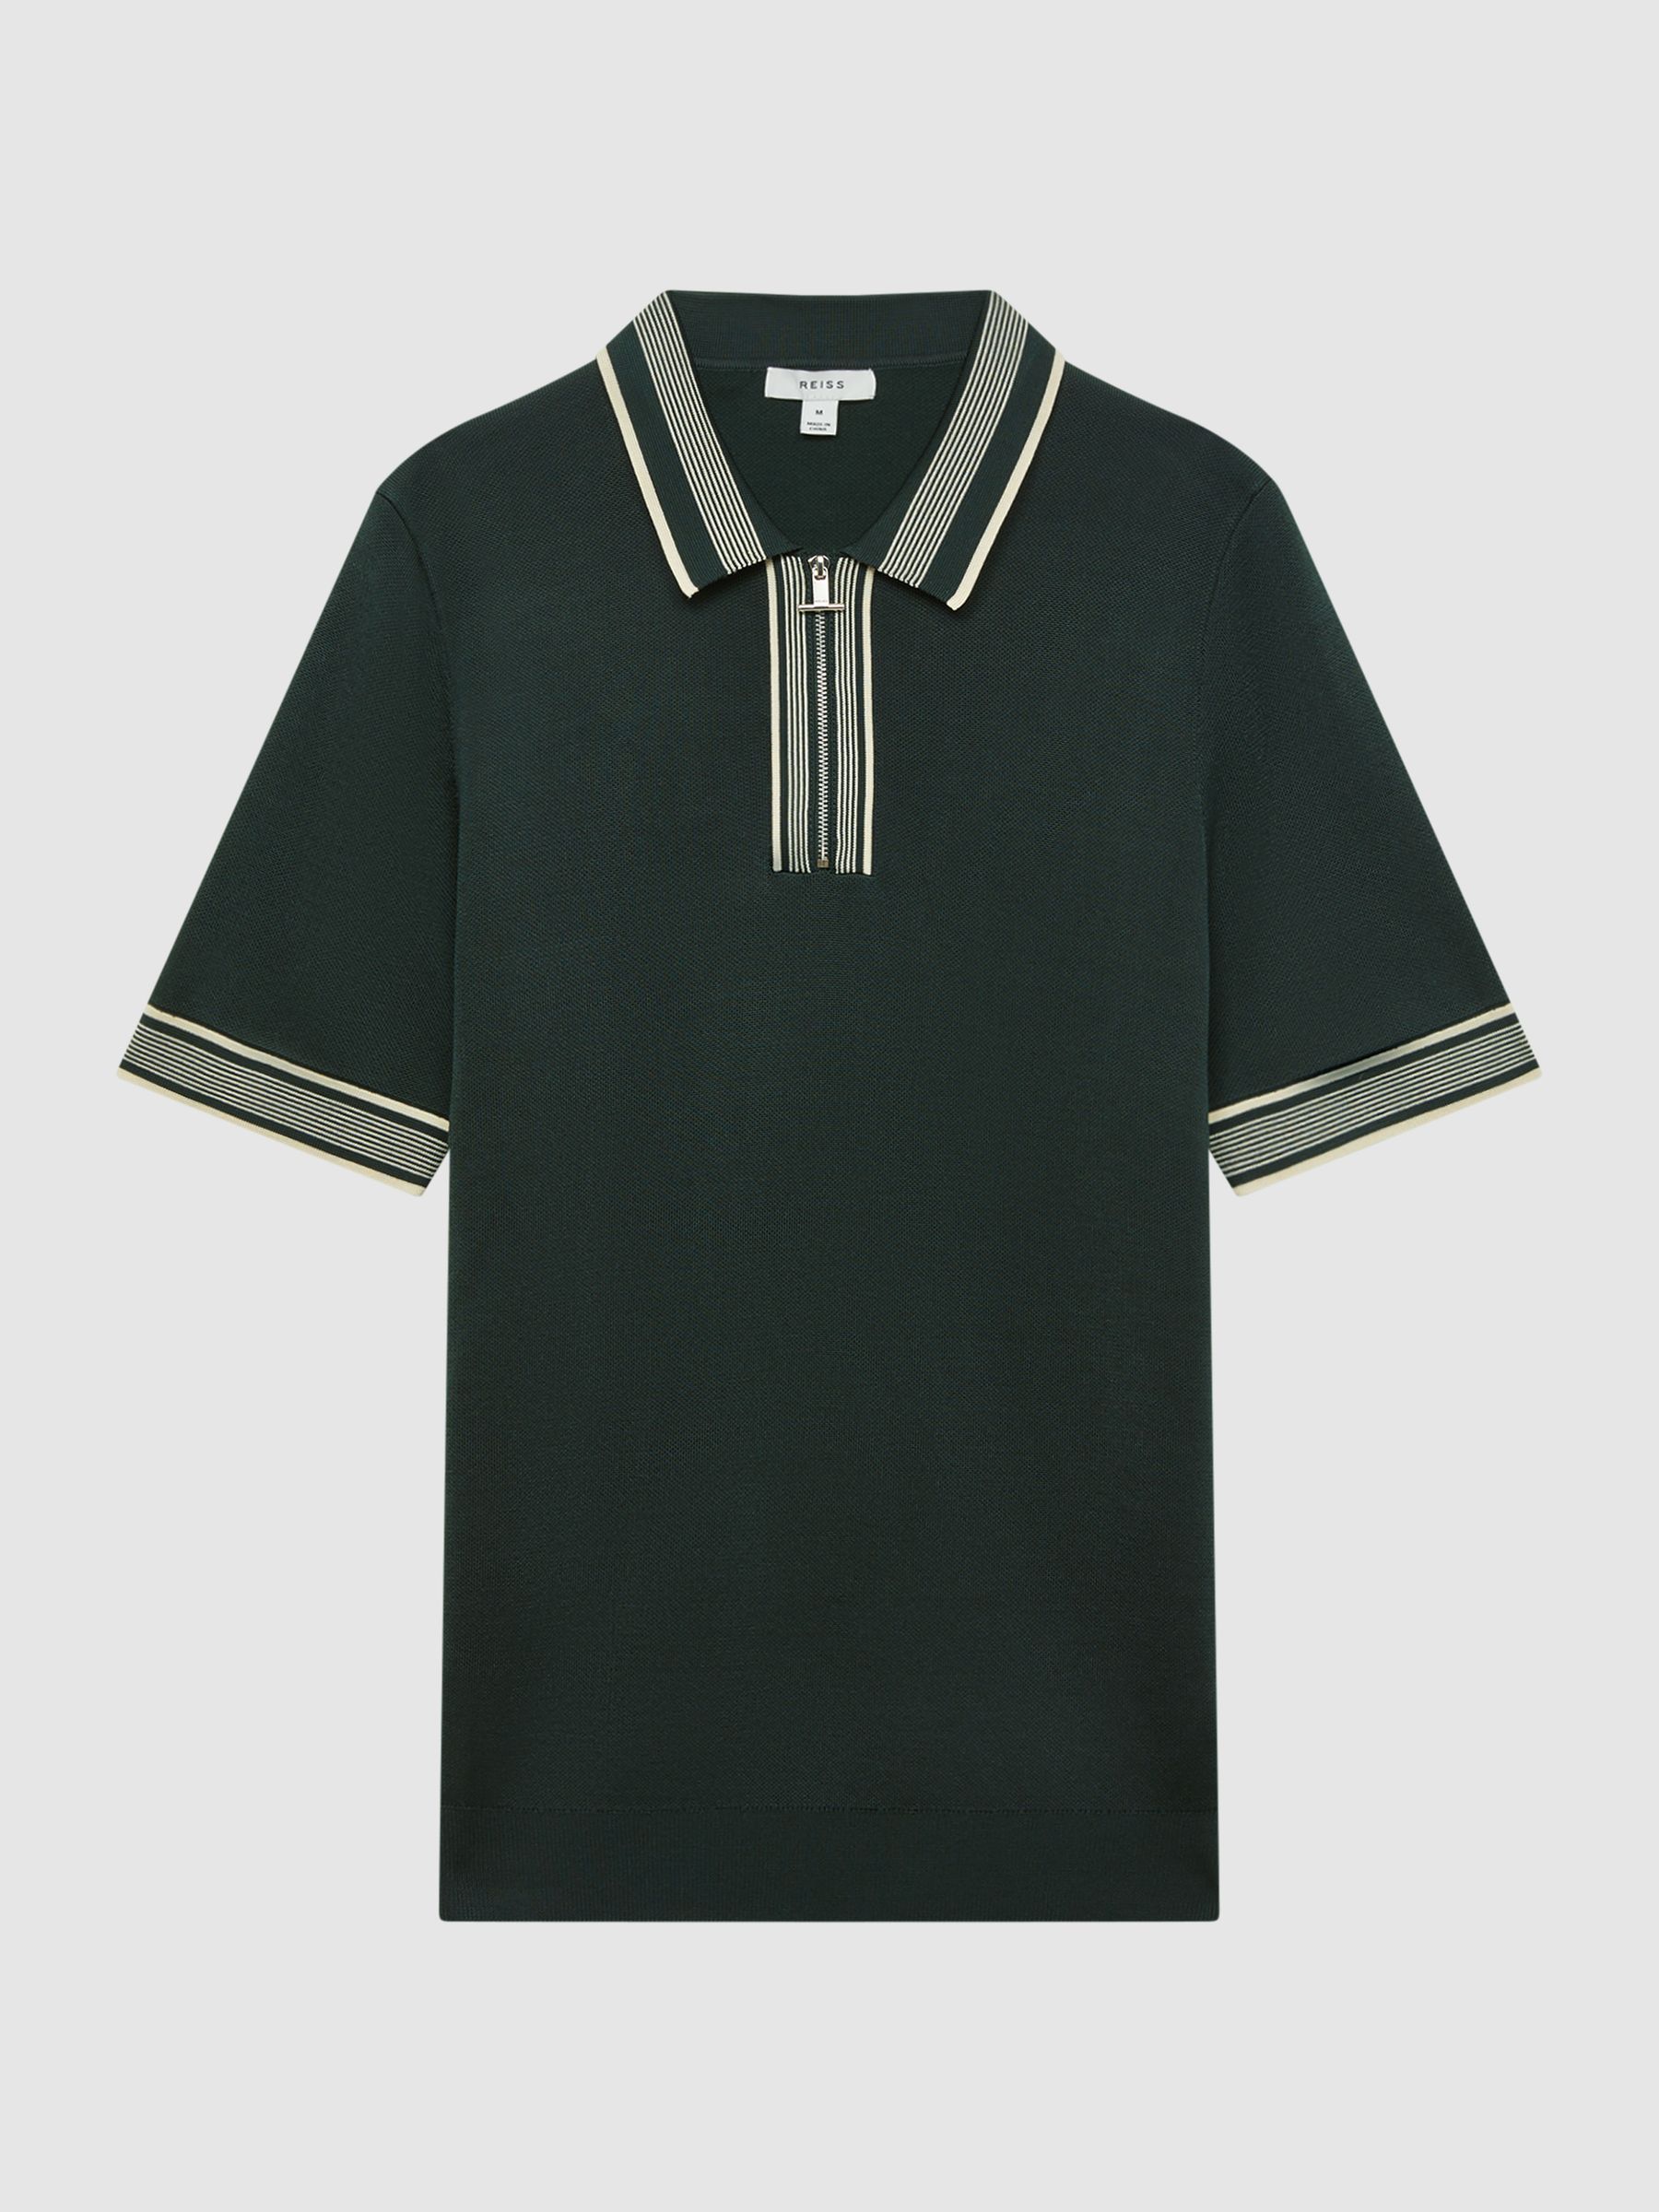 Reiss Regency Half-Zip Striped Polo Shirt | REISS Australia